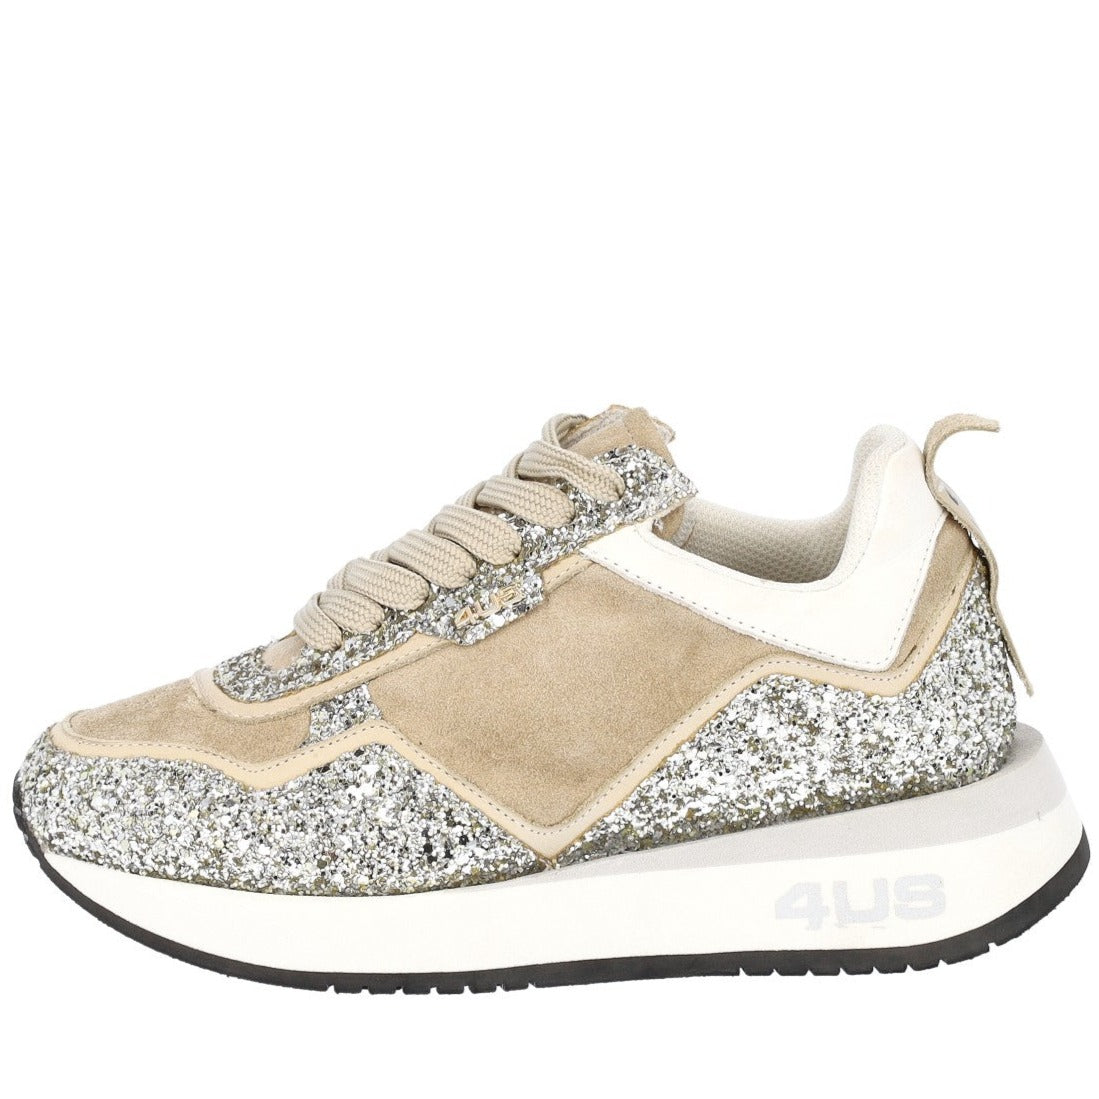 Sneakers Cesare Paciotti 4us beige leather gold glitter